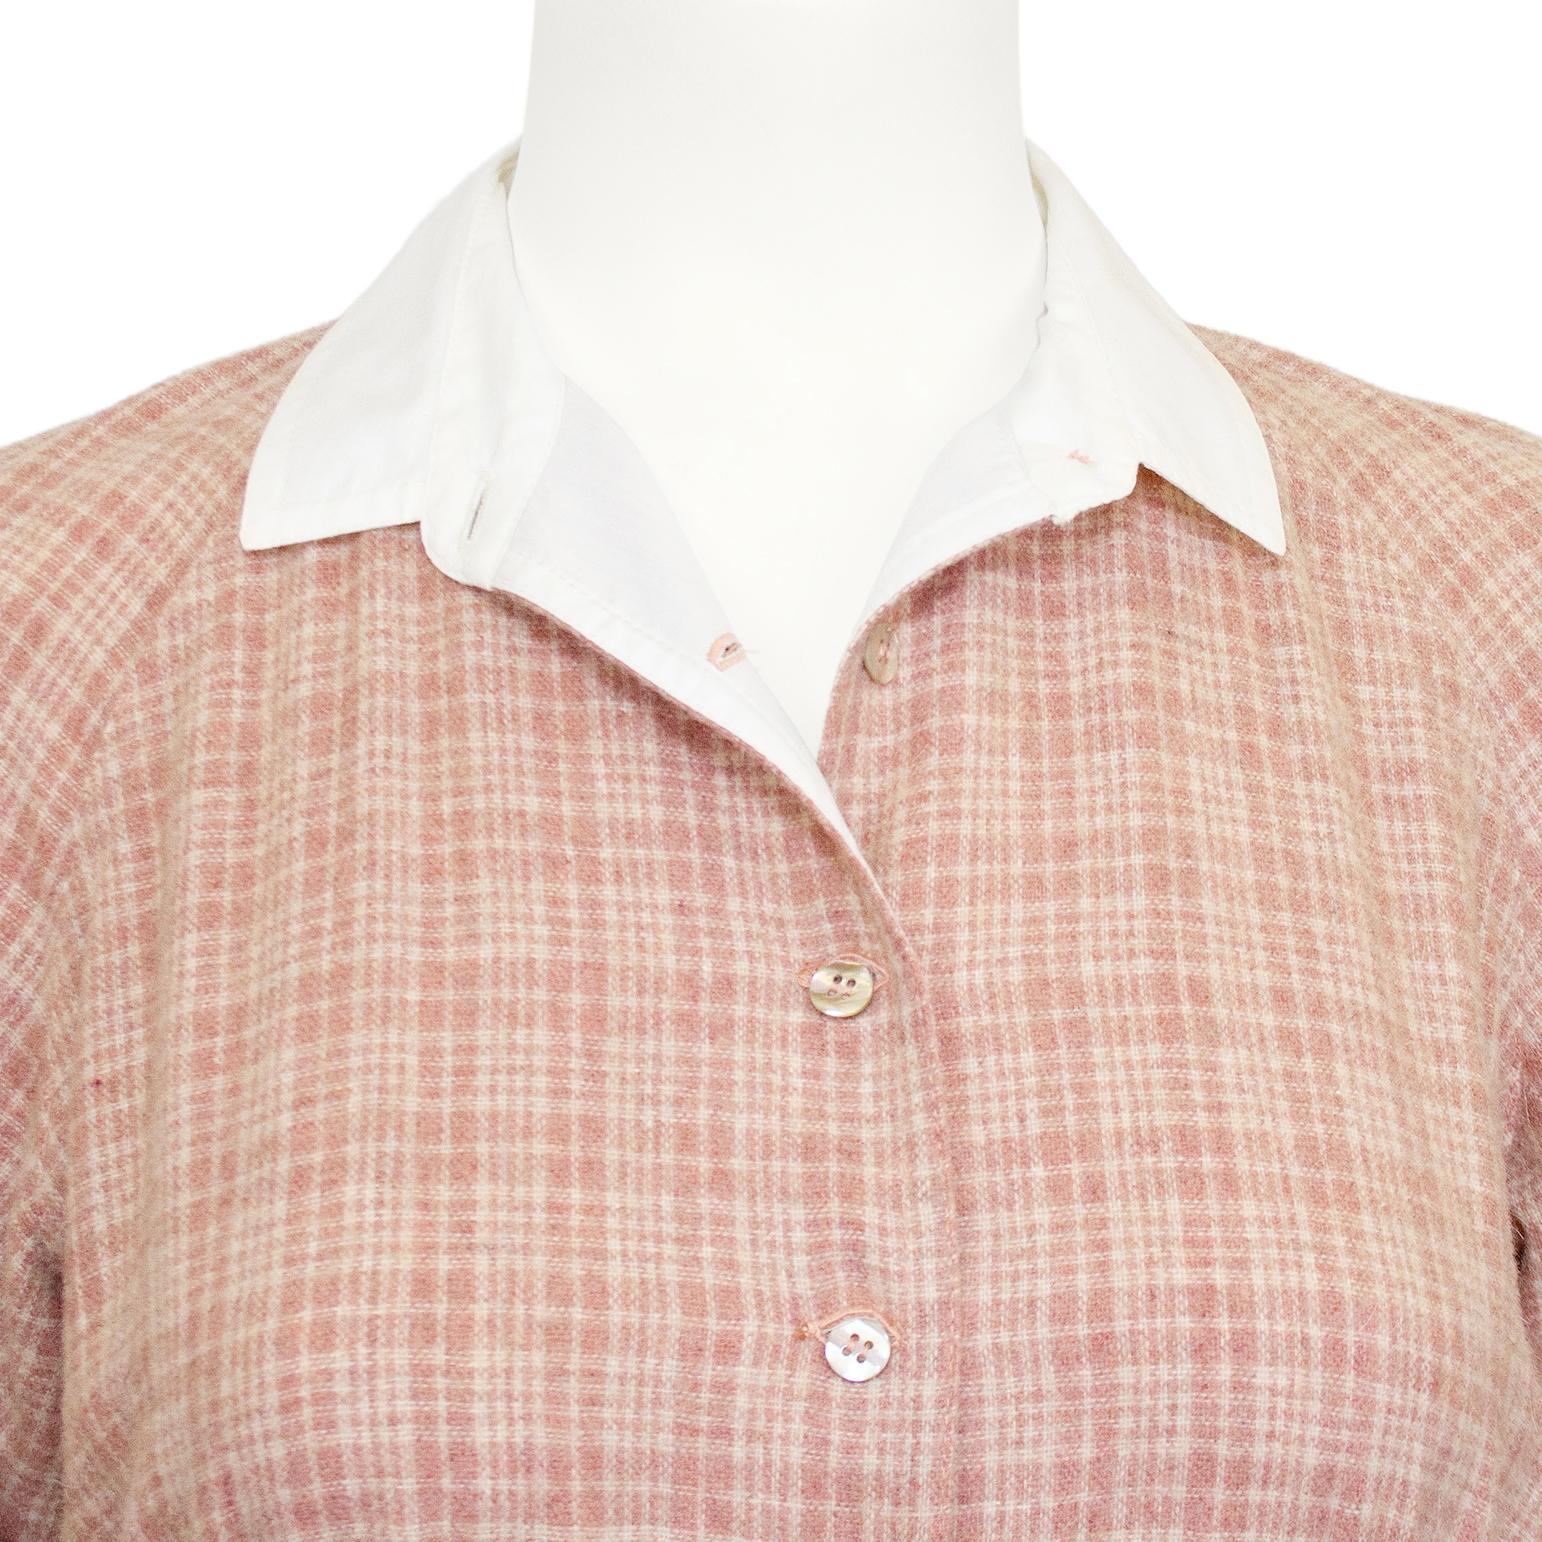 Fiorucci Vintage Pink Wool Shirtdress circa 1972 For Sale 1